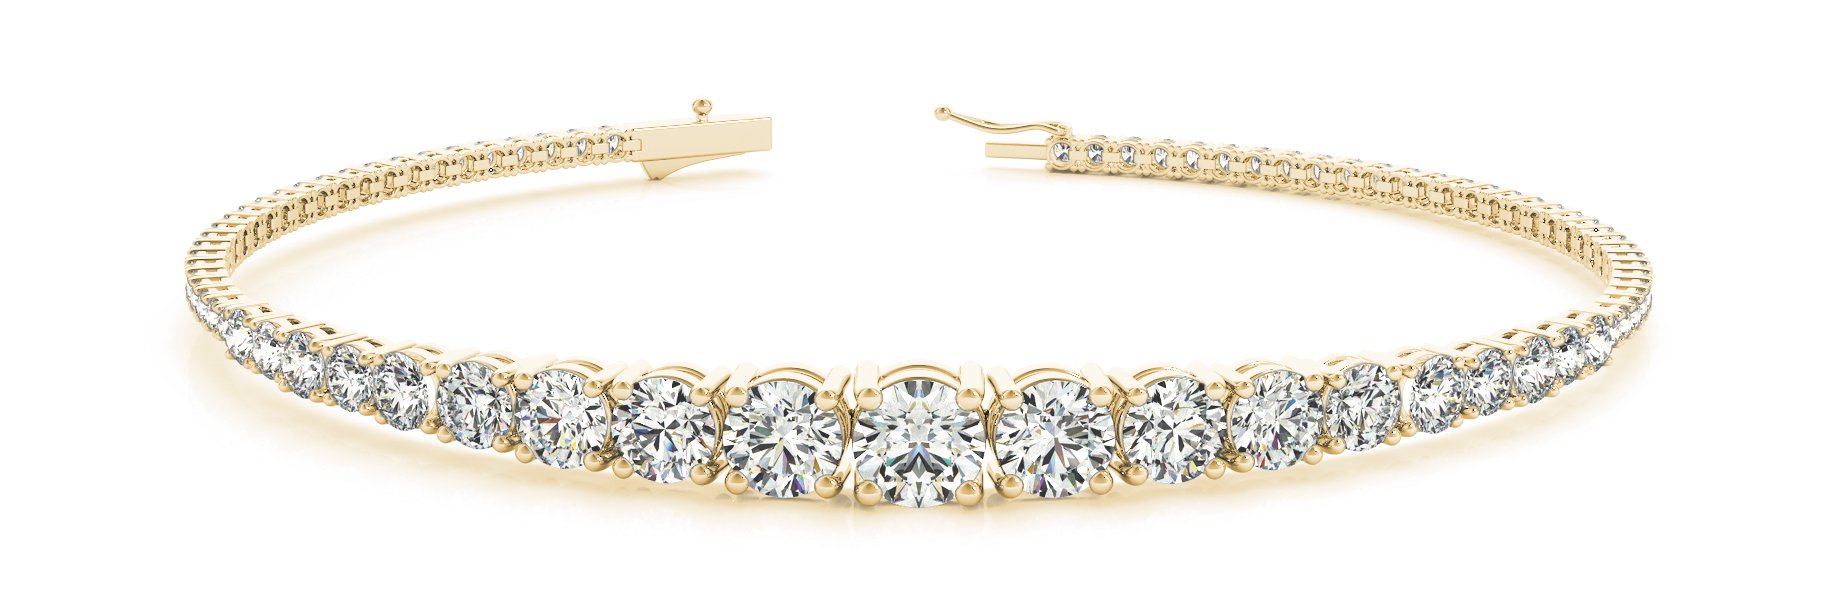 Fancy Diamond Bracelet Ladies 3.51ct tw - 14kt Yellow Gold